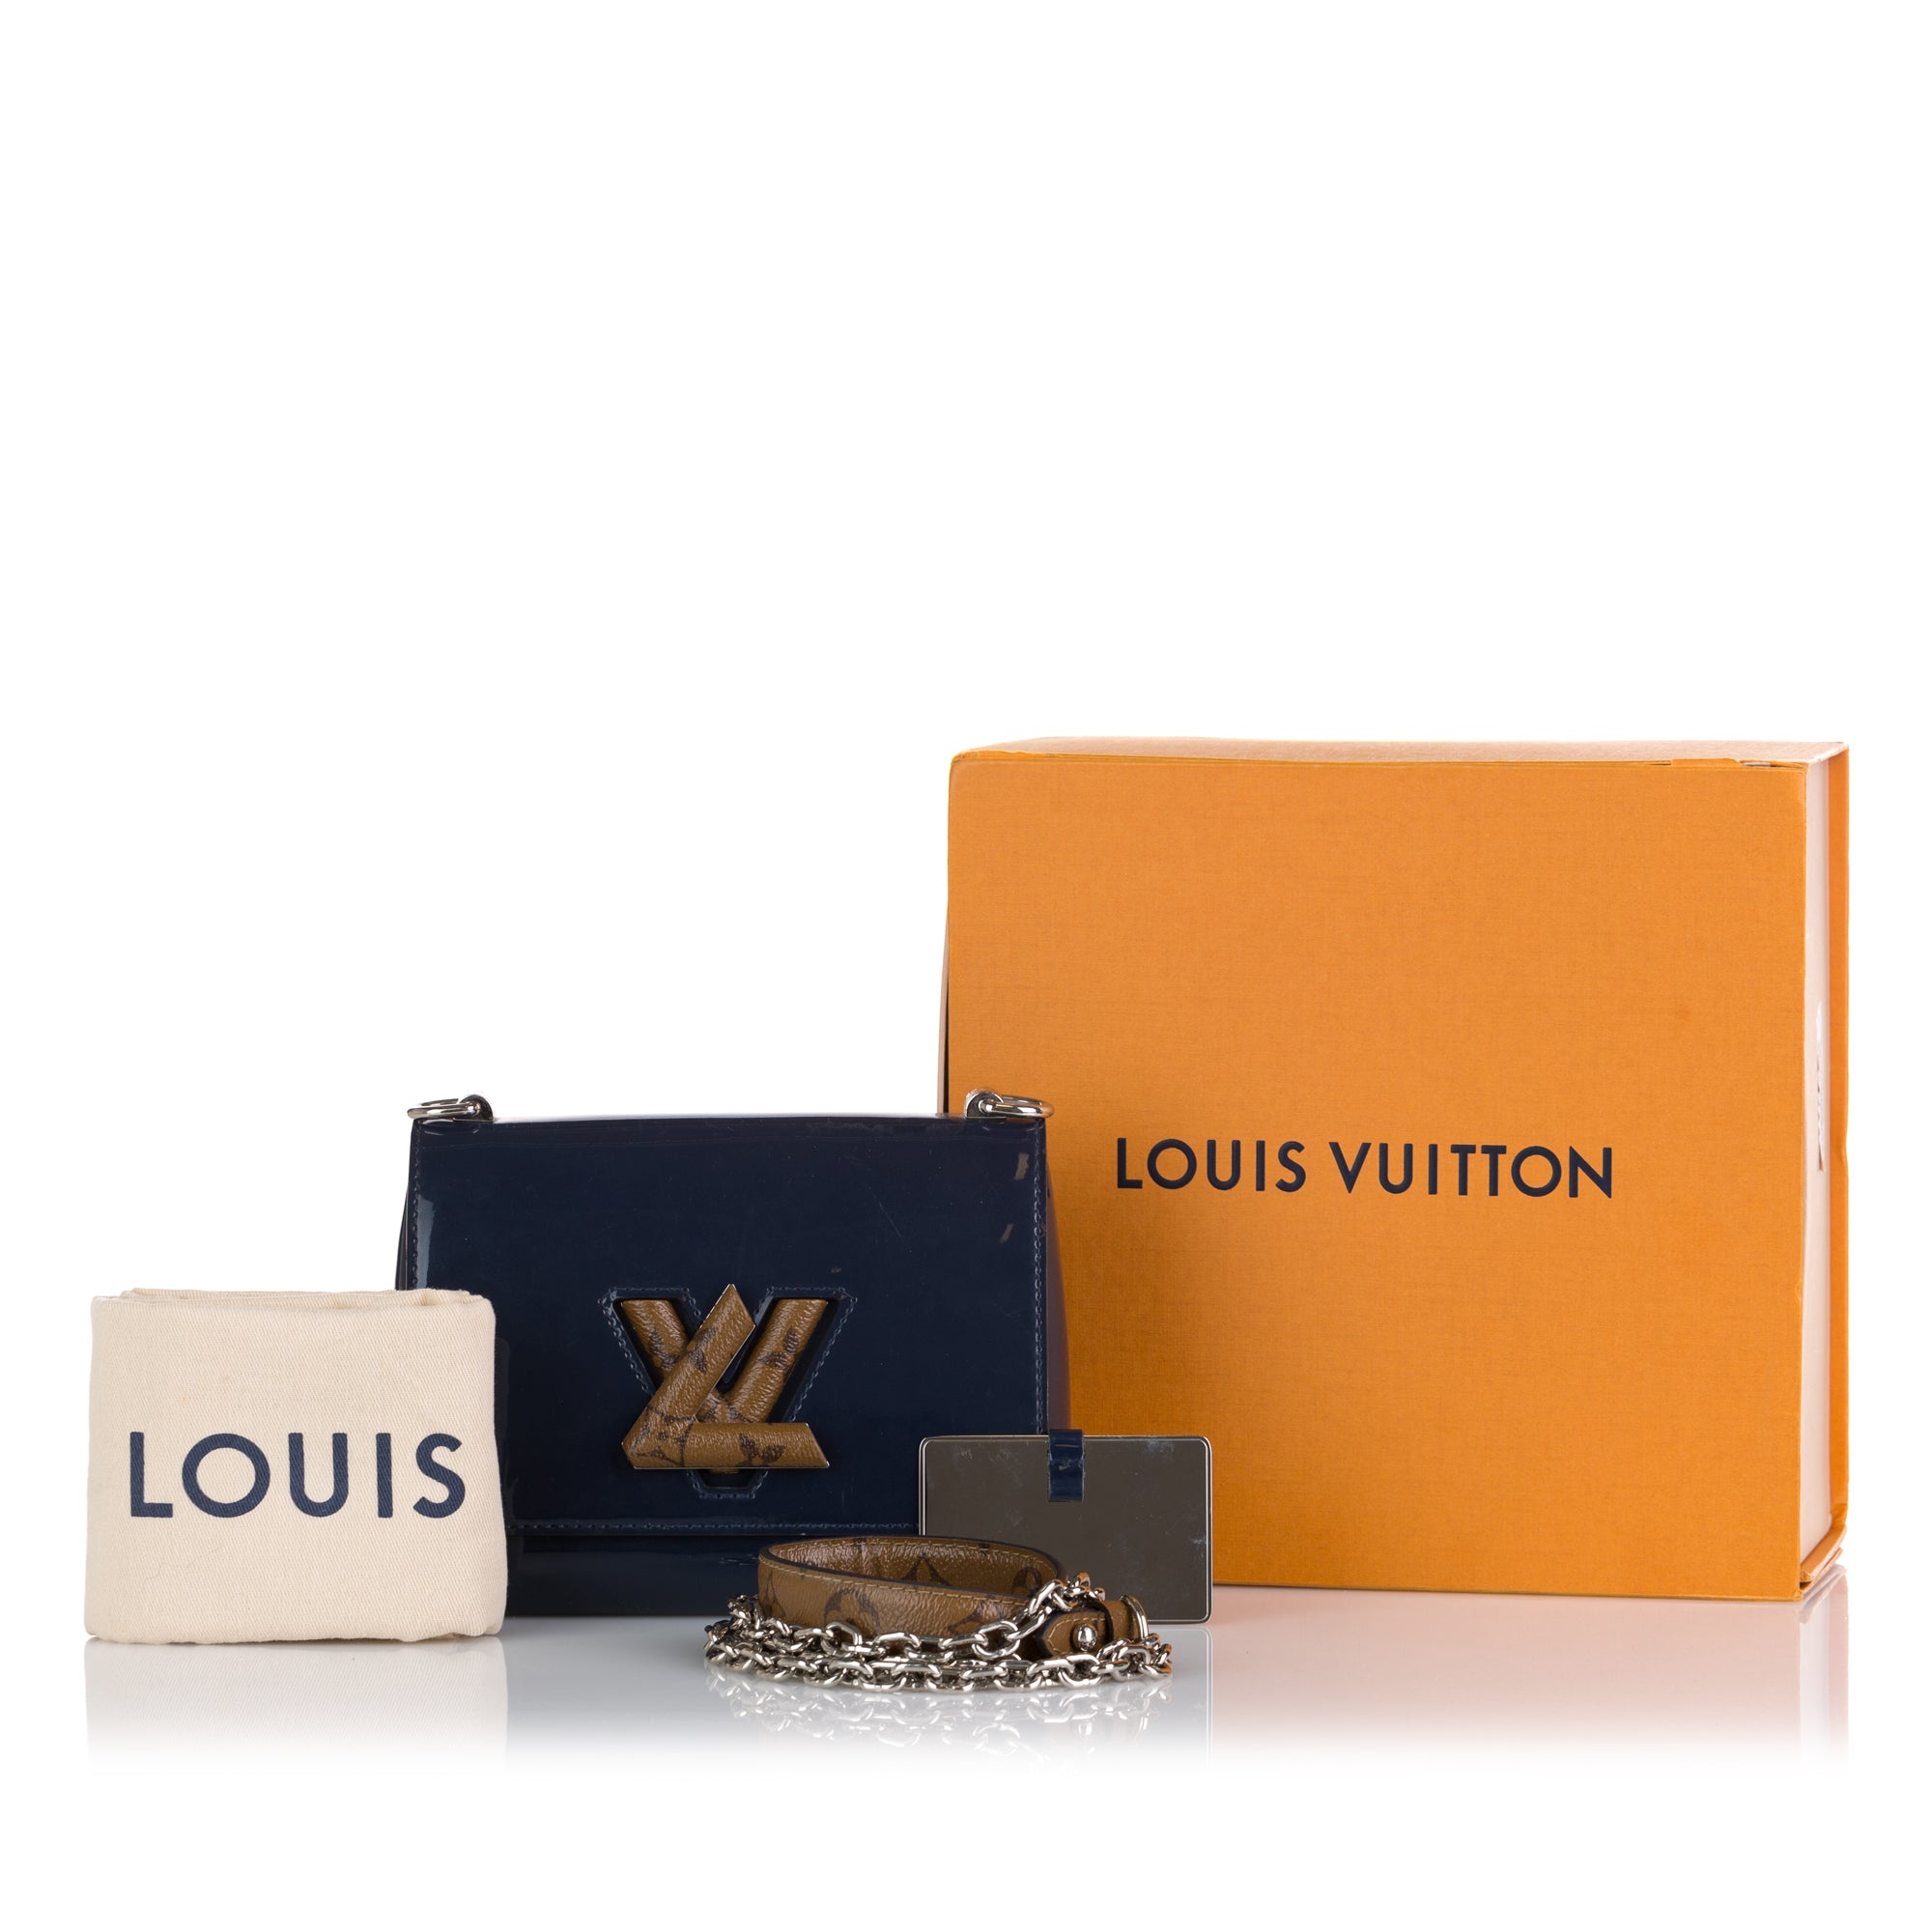 Louis Vuitton Wallet 12cm Blue Ganebet Store